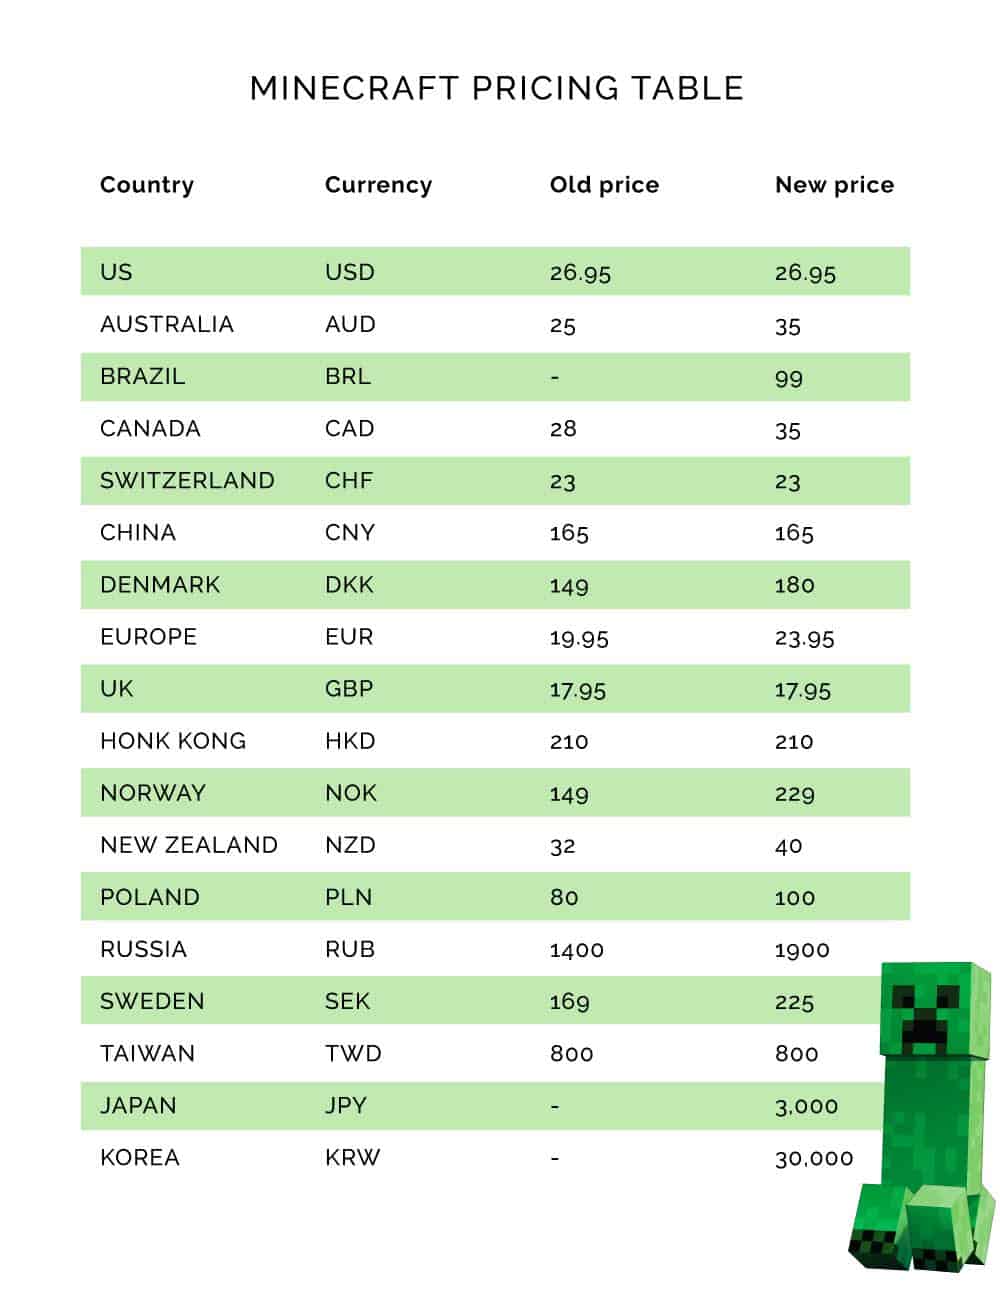 Minecraft price increases around the world